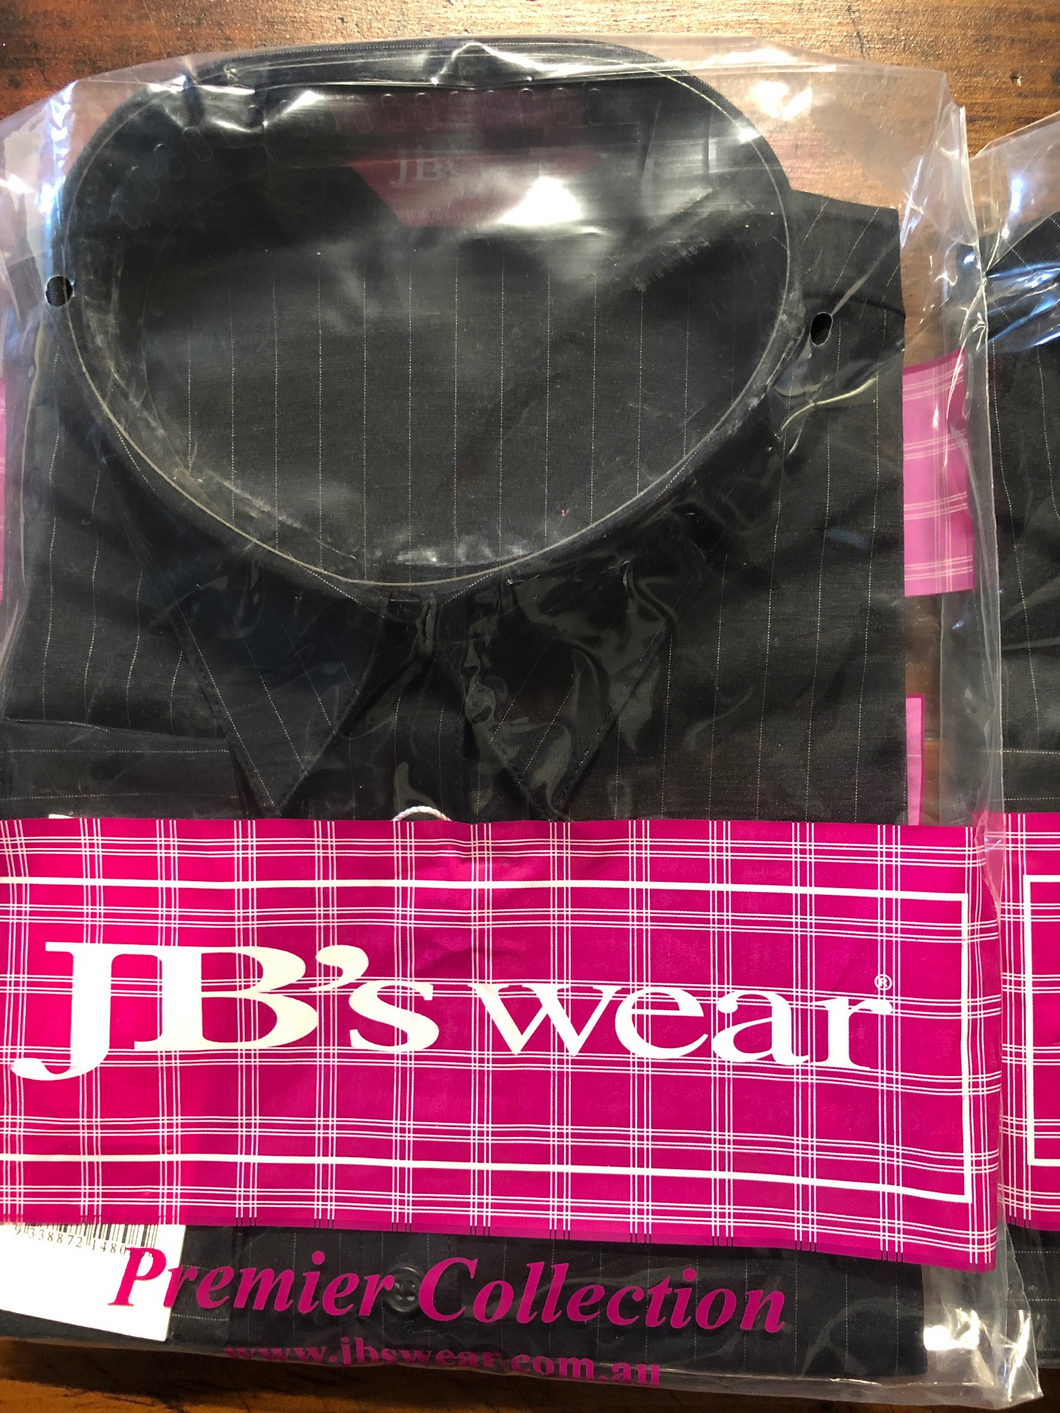 JB's Wear Pinstripe 3/4 sleeve collared ladies shirt